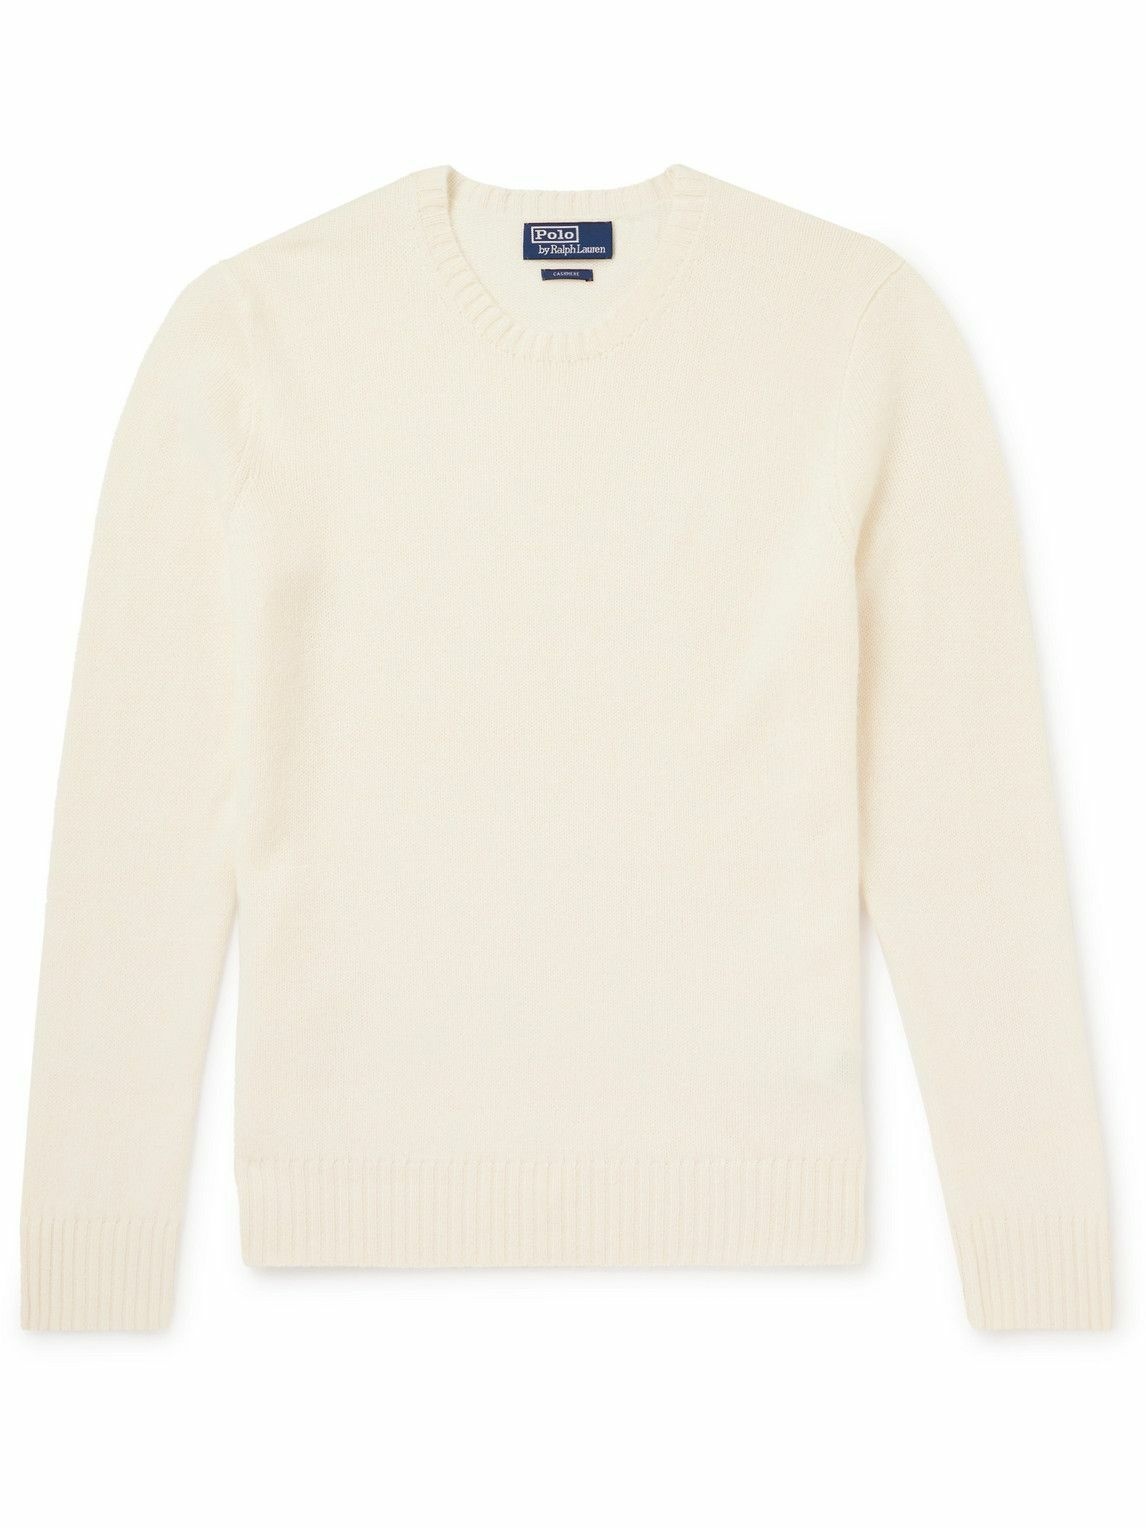 Polo Ralph Lauren - Cashmere Sweater - White Polo Ralph Lauren